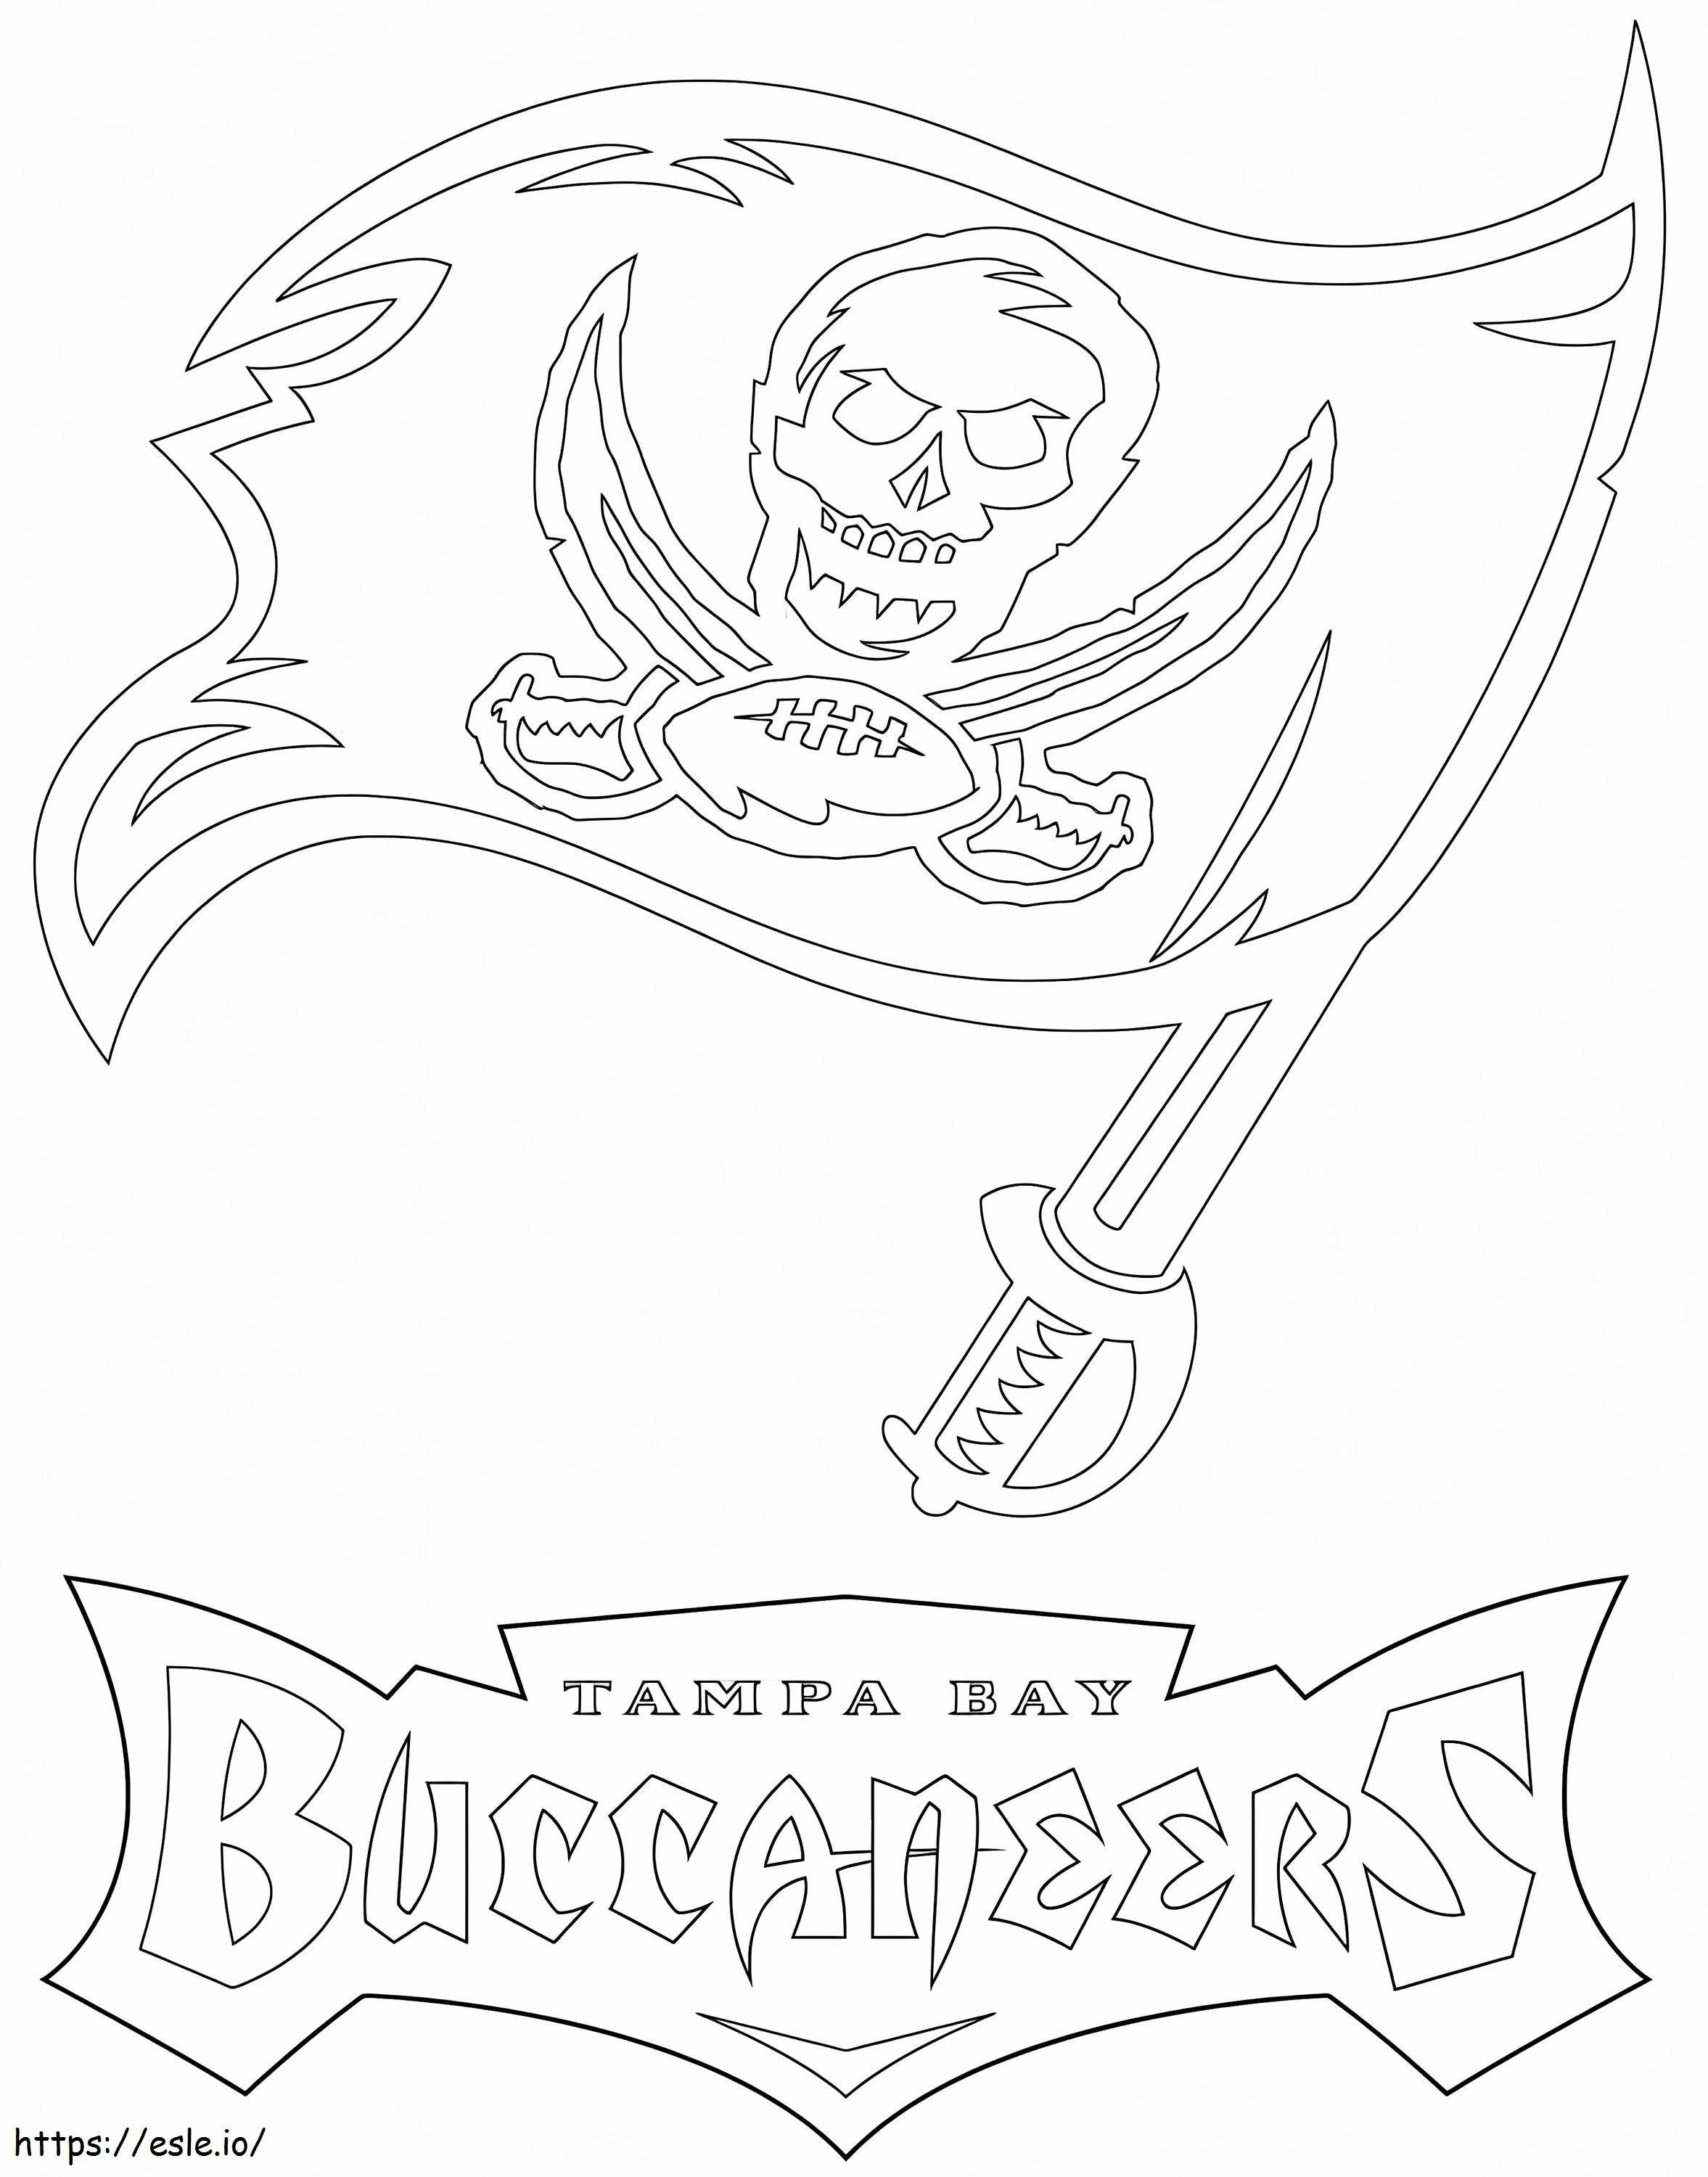 Tampa Bay Buccaneers-logo kleurplaat kleurplaat